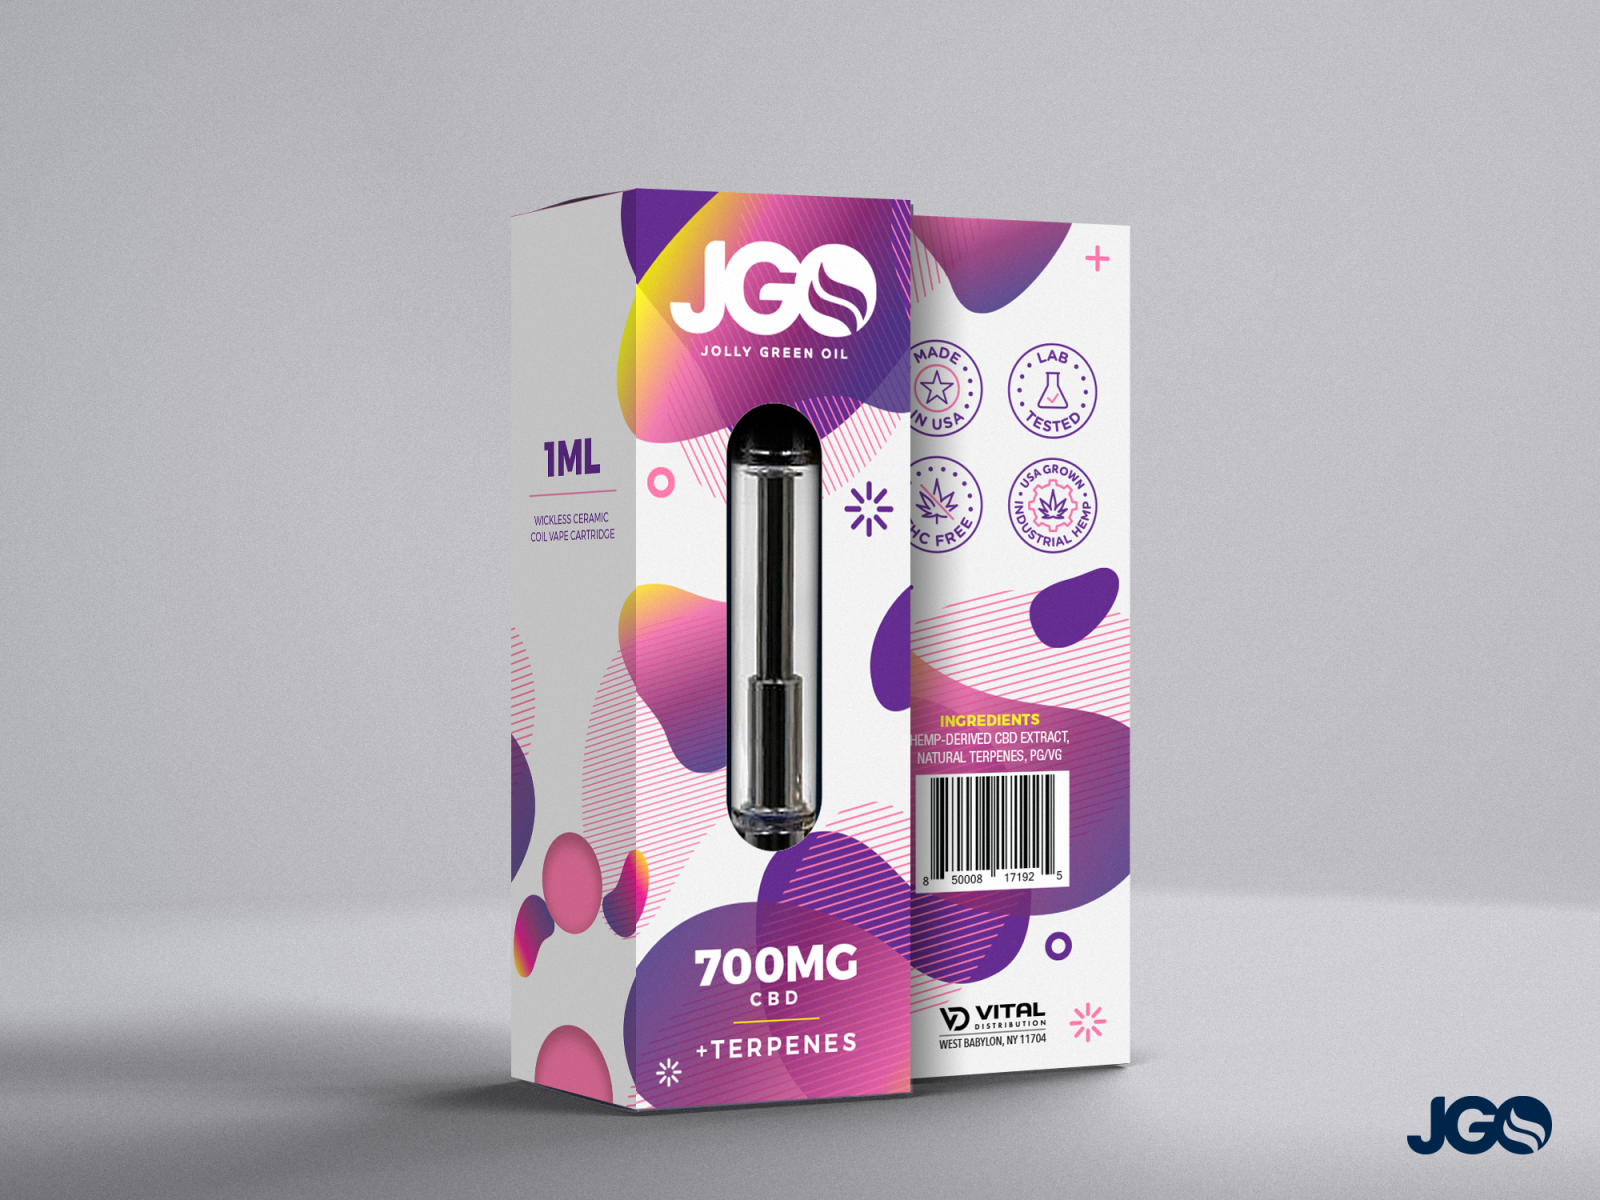 Download Jgo Vape Cartridge Packaging By Alexander On Dribbble